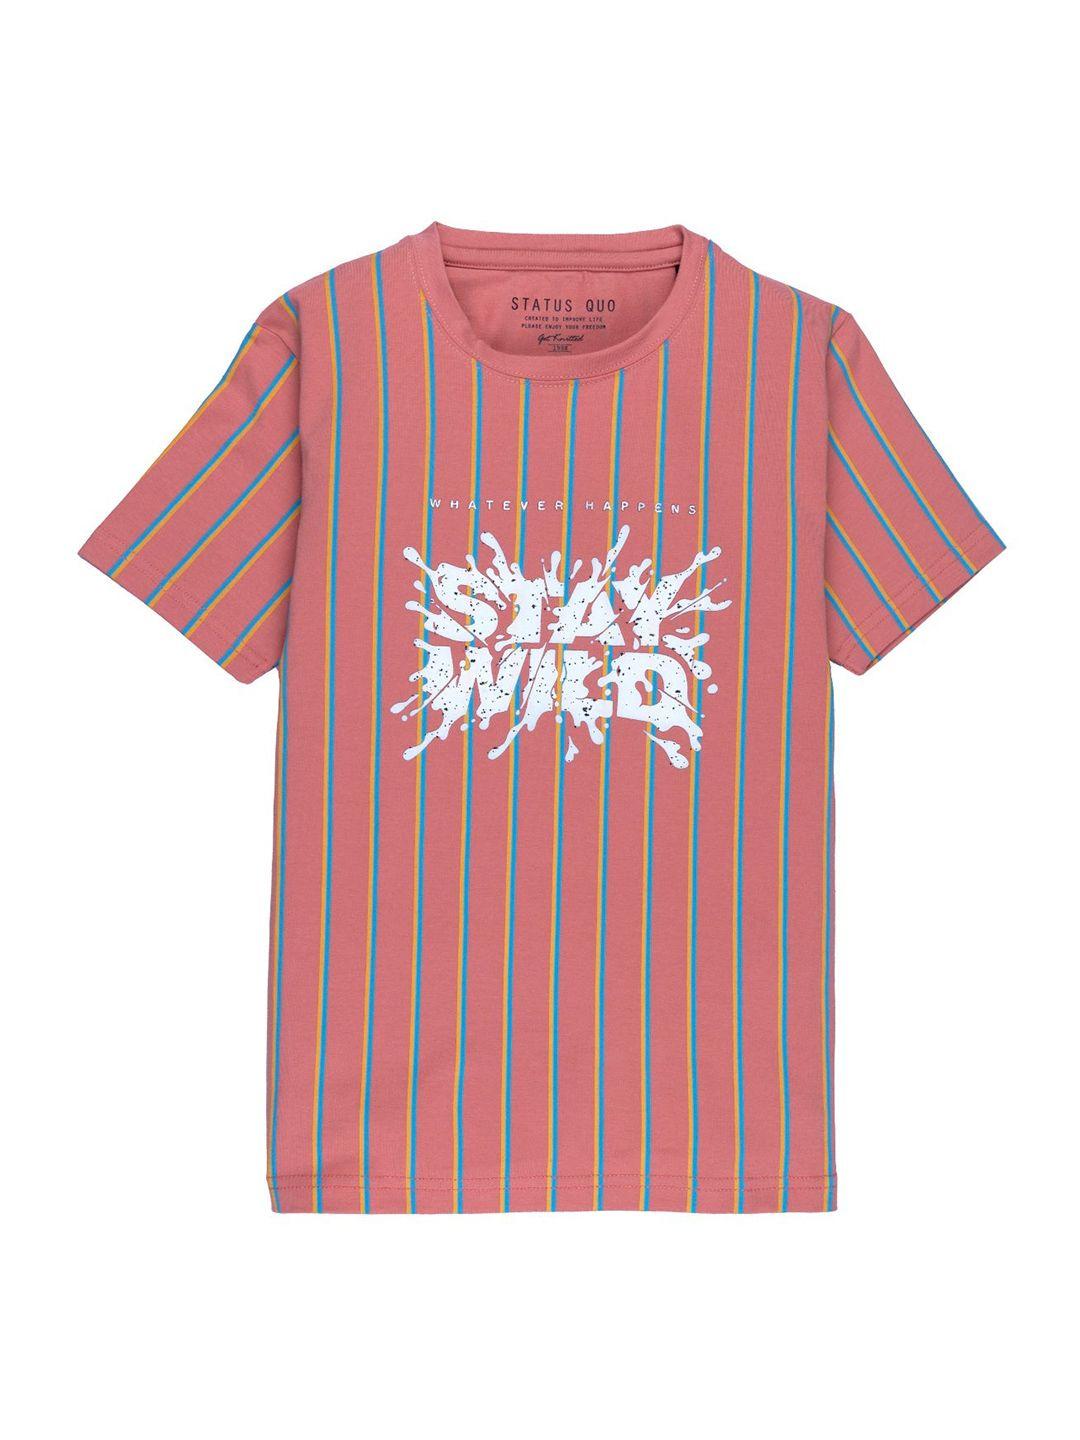 status quo boys pink striped applique t-shirt